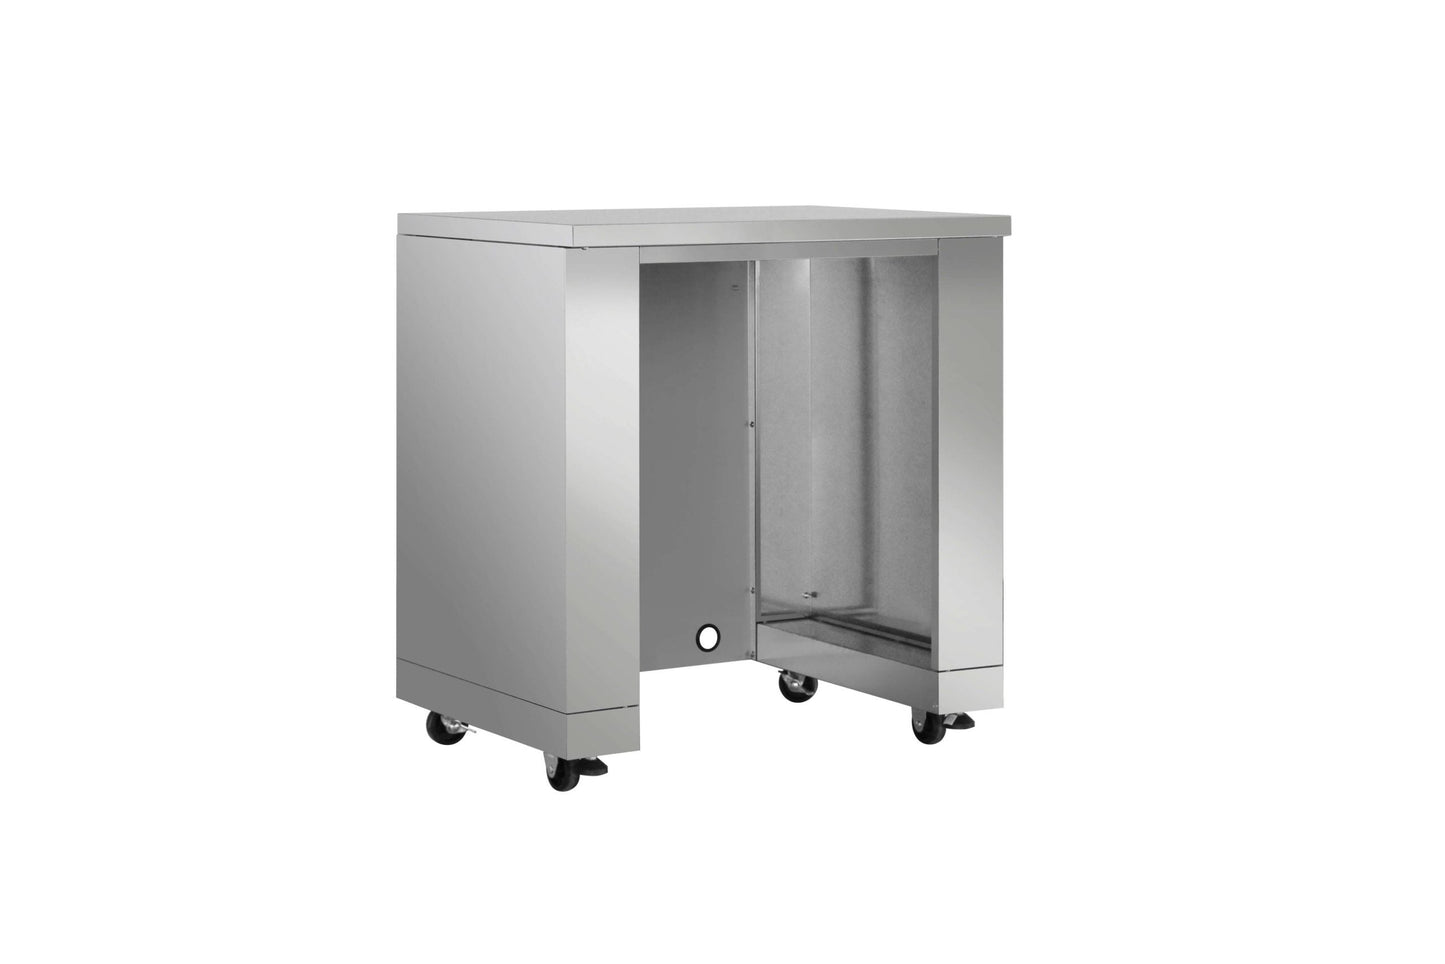 Thor Outdoor Kitchen Refrigerator Cabinet in Stainless Steel